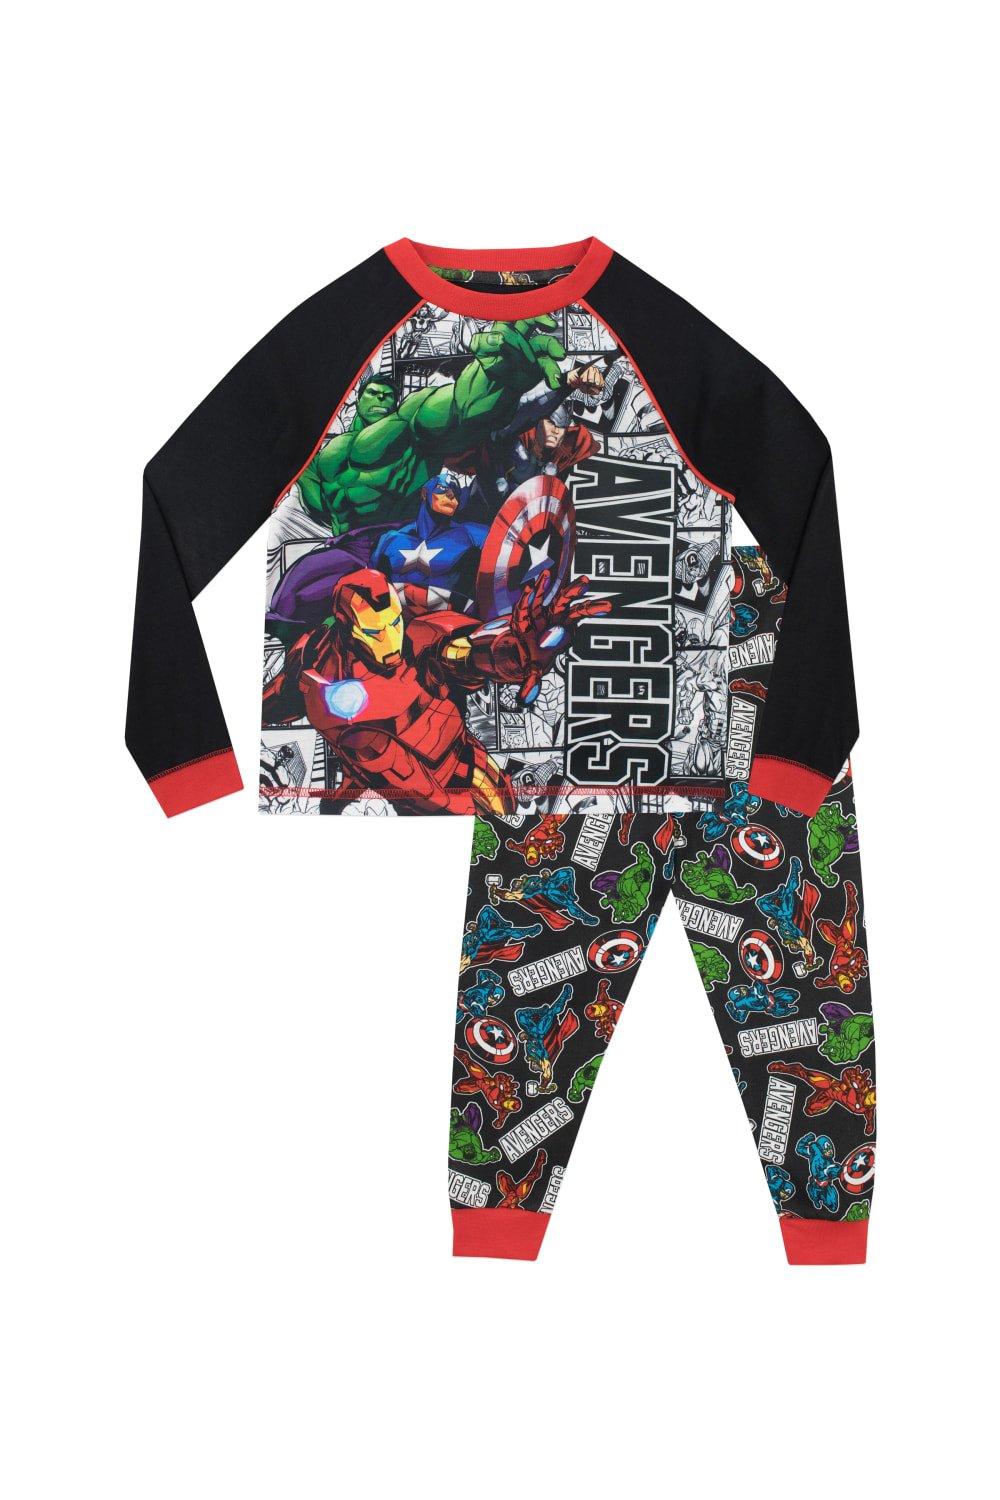 Avengers Pyjamas Iron Man Incredible Hulk Thor